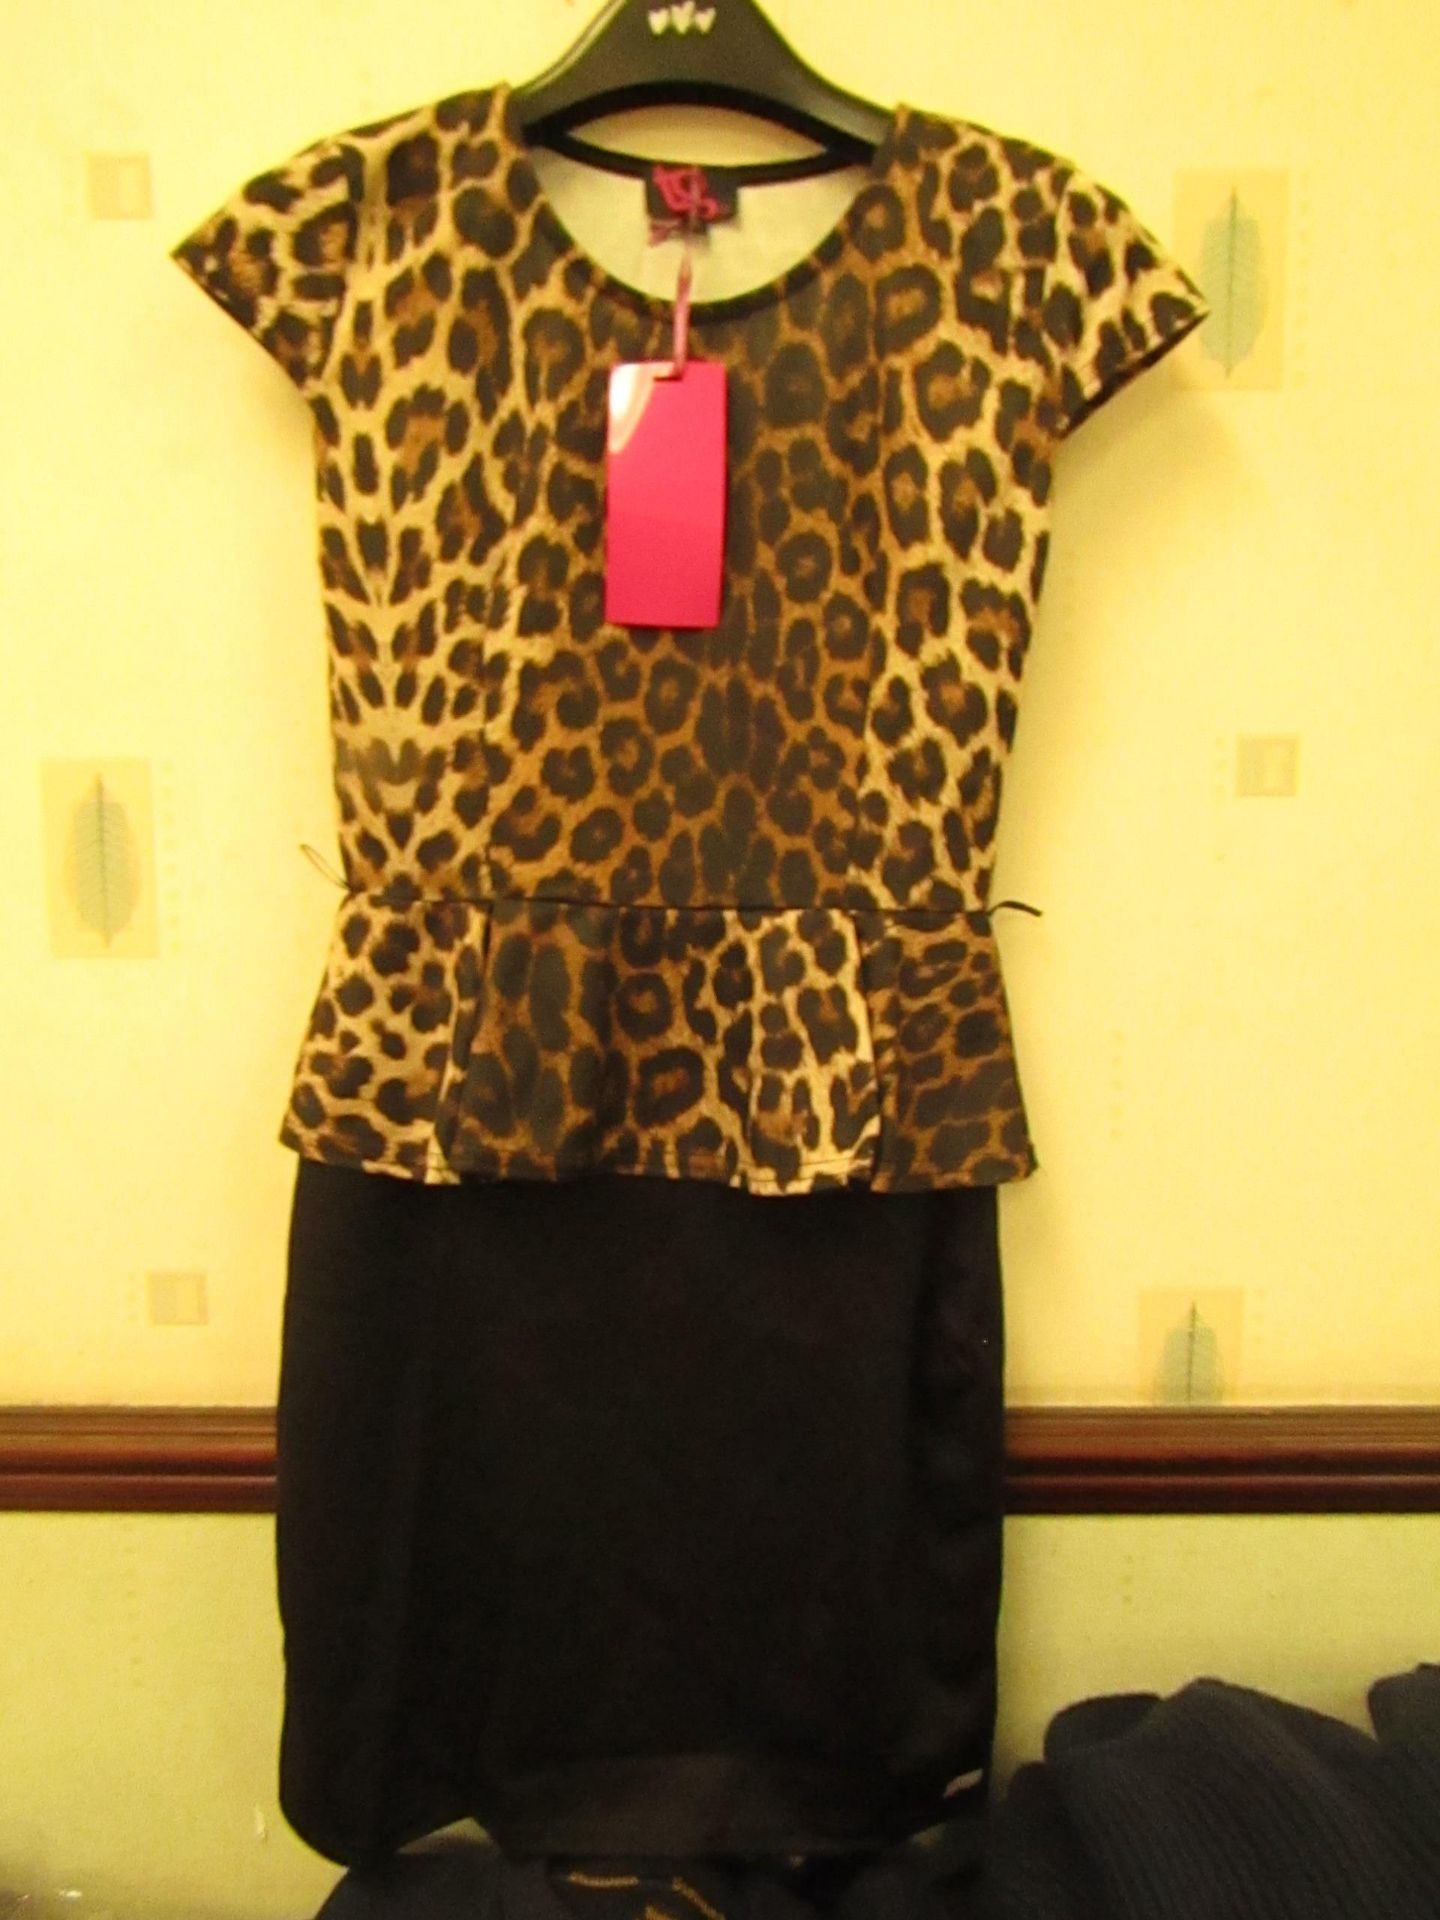 1 x TG Ladies Leopard Print/Black Dress with belt size 10 new with tag